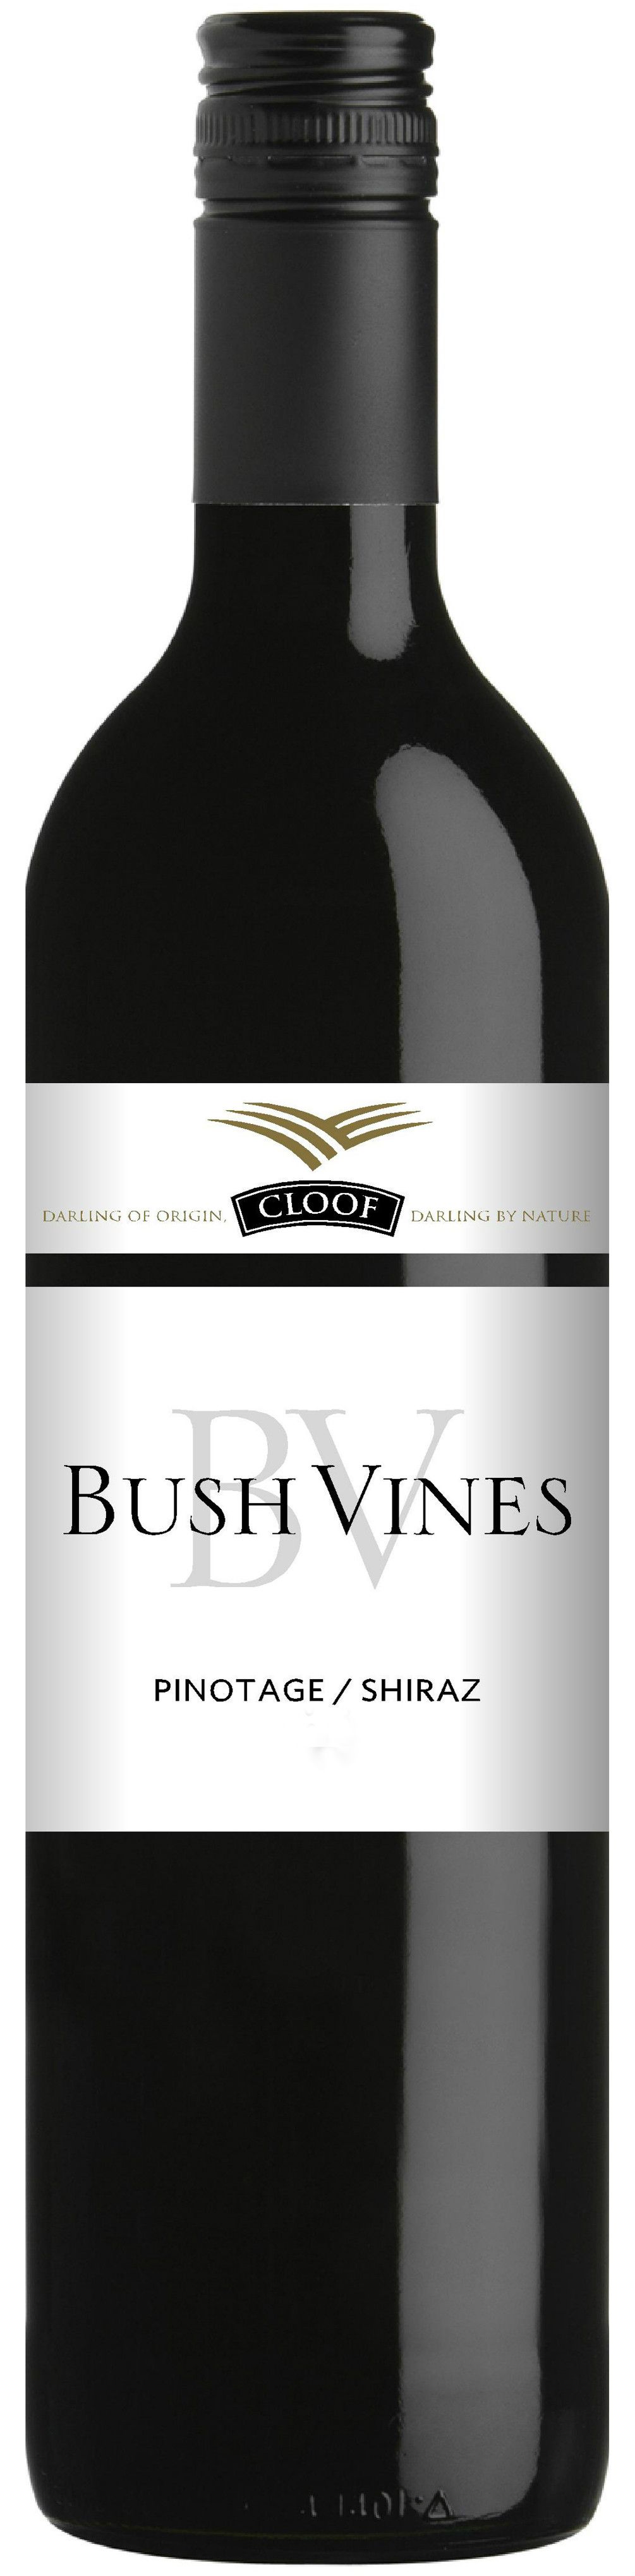 Cloof, Bush Vines Pinotage Shiraz, 2016